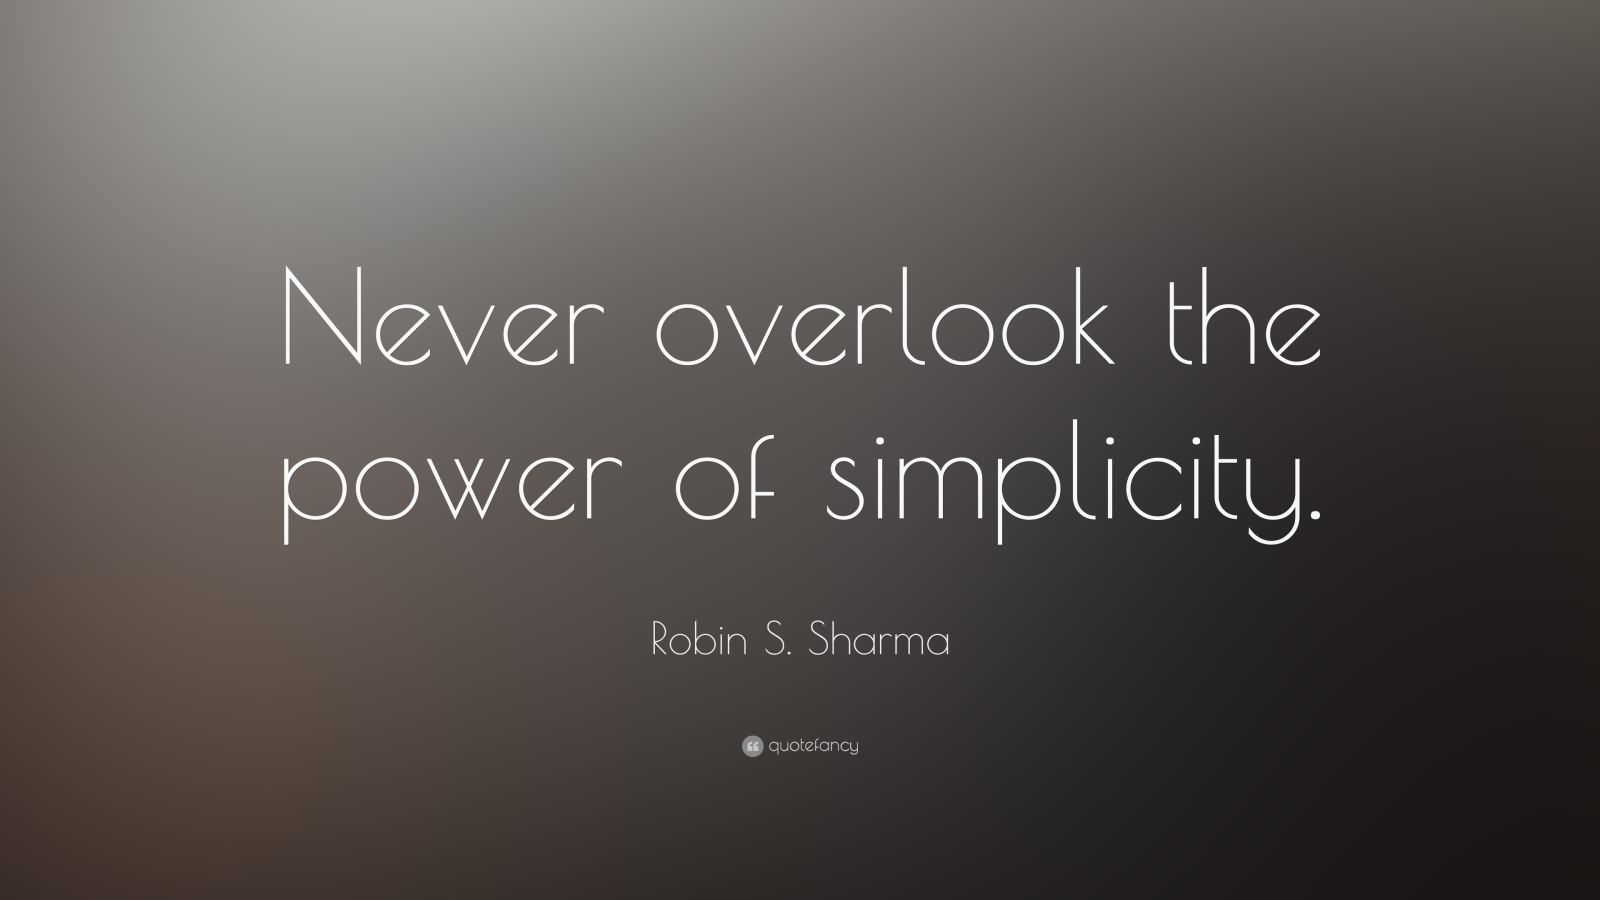 Never overlook the power of simplicity - Robin S. Sharma